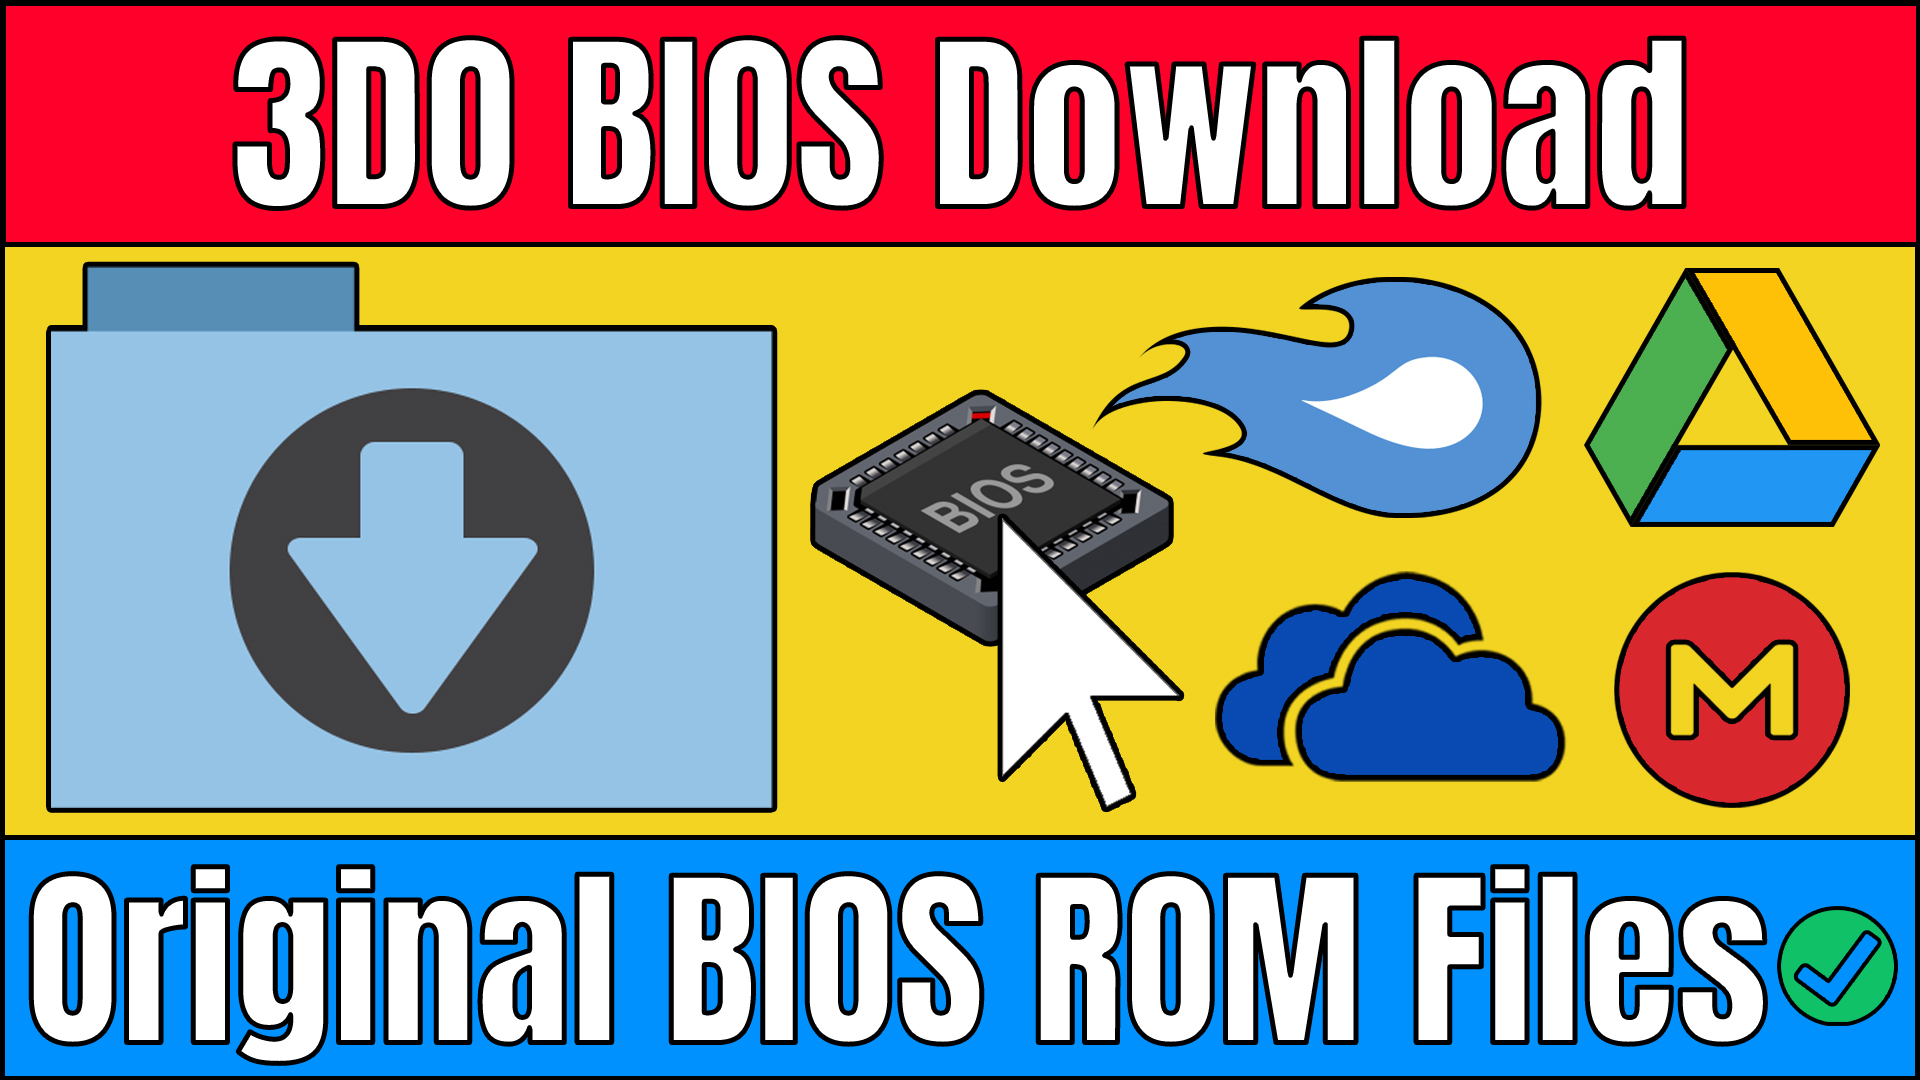 3DO BIOS Download